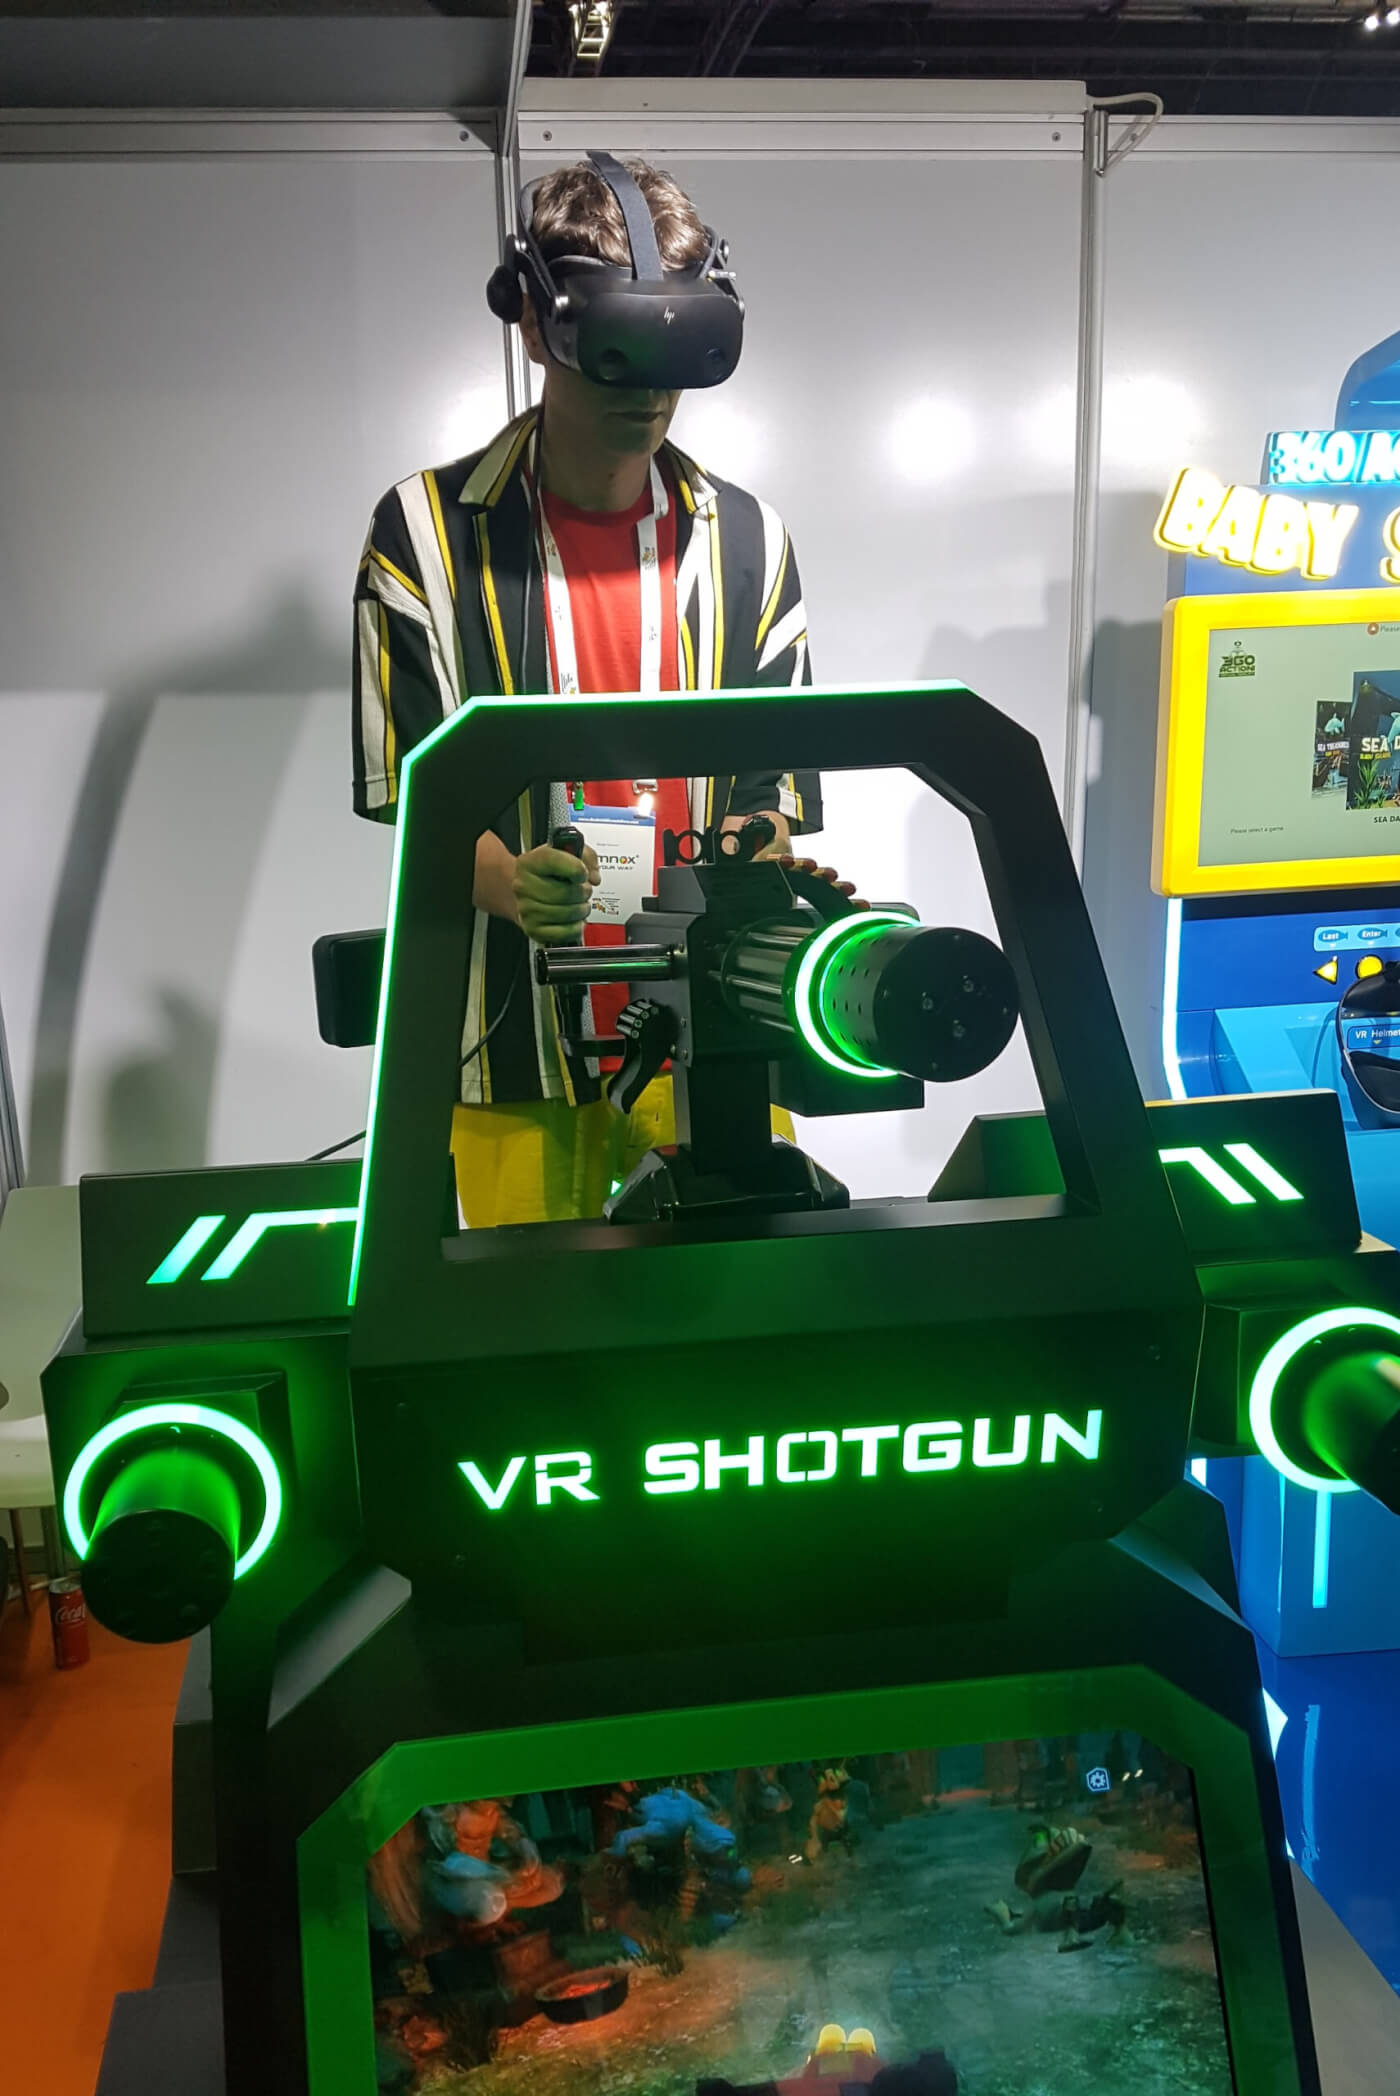 VR Shotgun